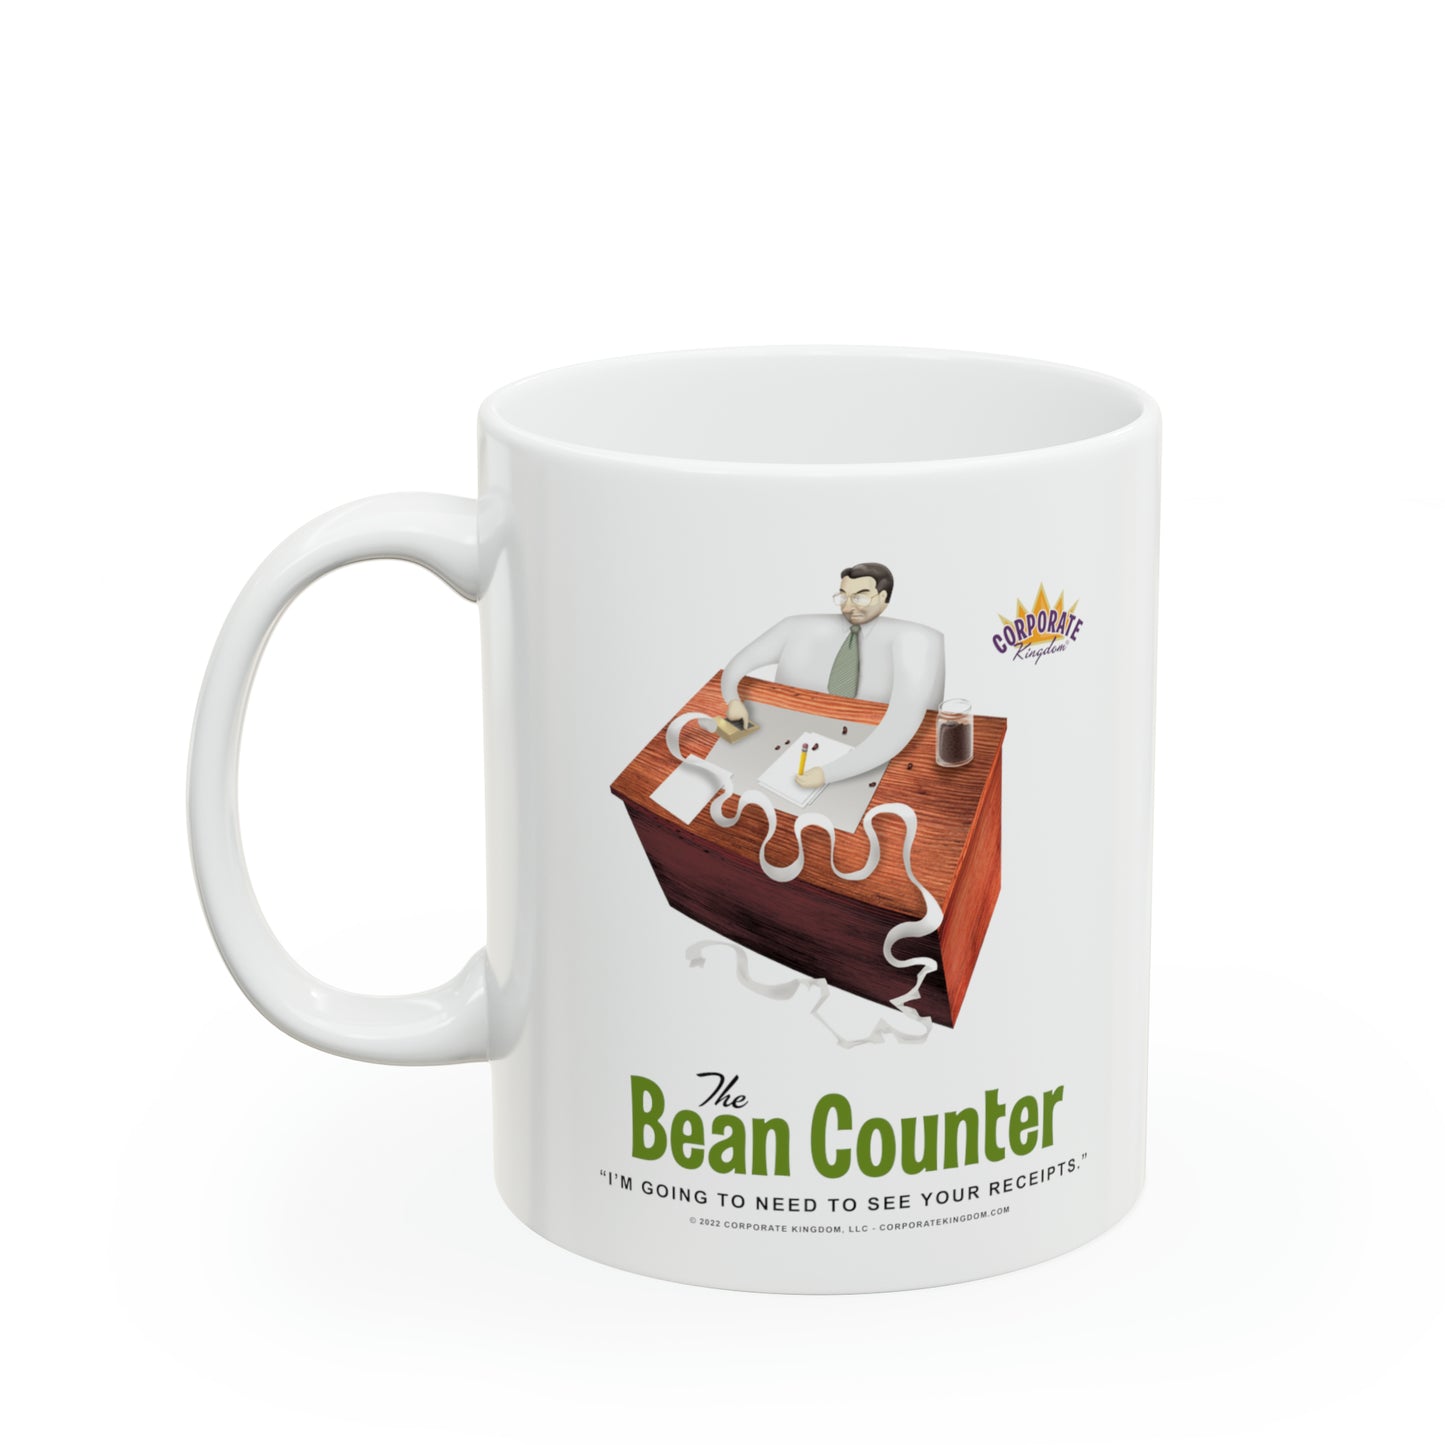 Bean Counter Coffee Mug by Corporate Kingdom®